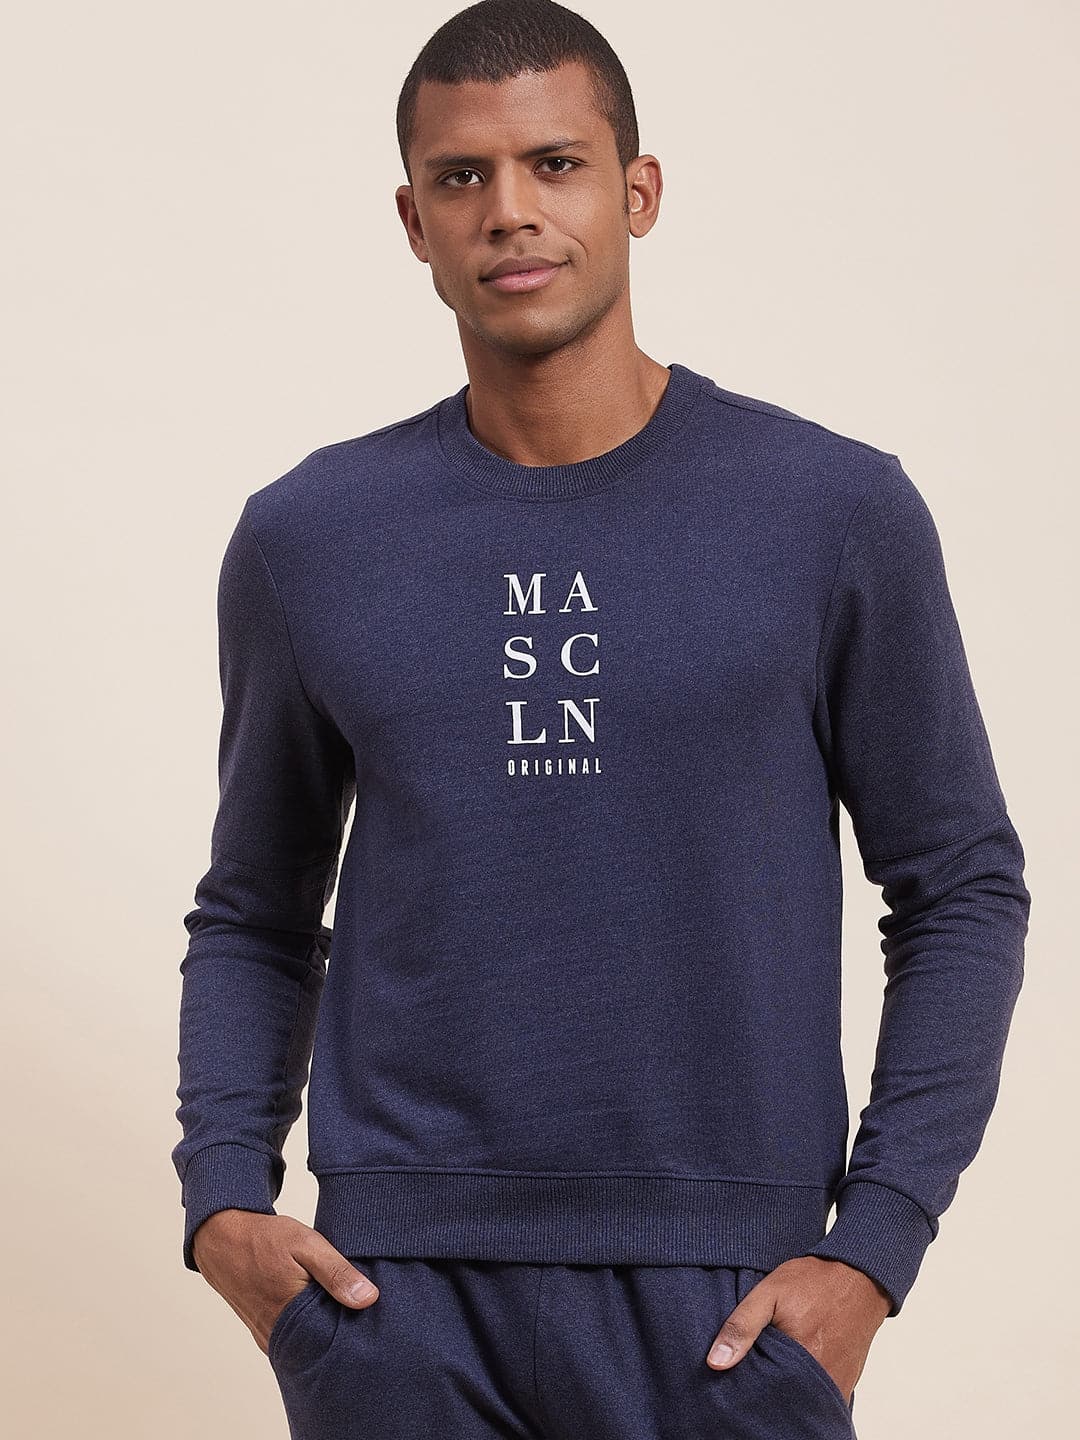 Men's Blue Melange Vertical MASCLN Print Sweatshirt - LYUSH-MASCLN